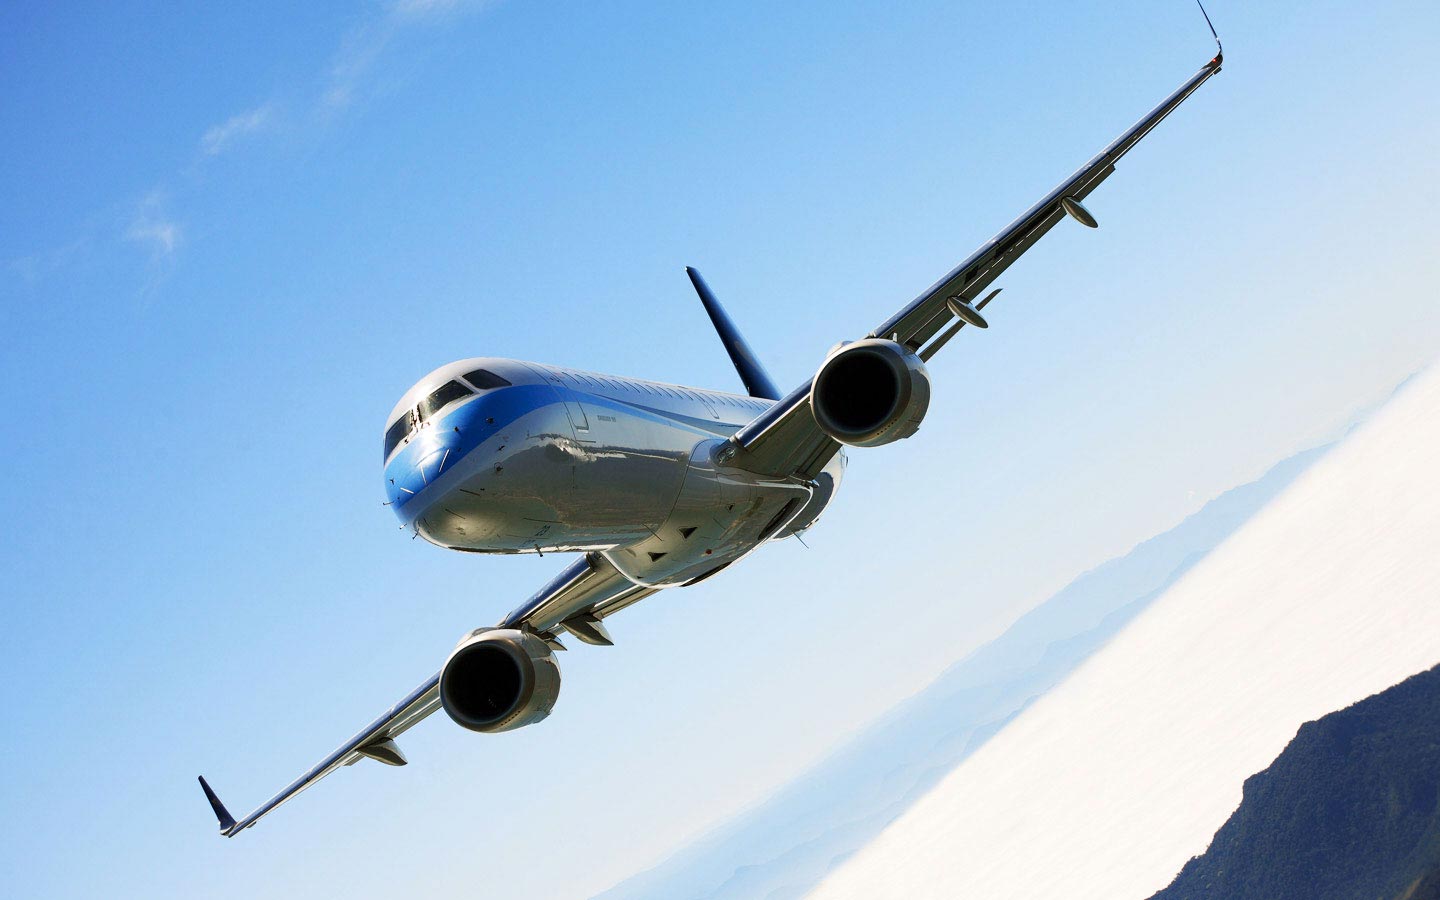 Austral sumaría otros dos Embraer 190 que hoy operan para Republic Airlines